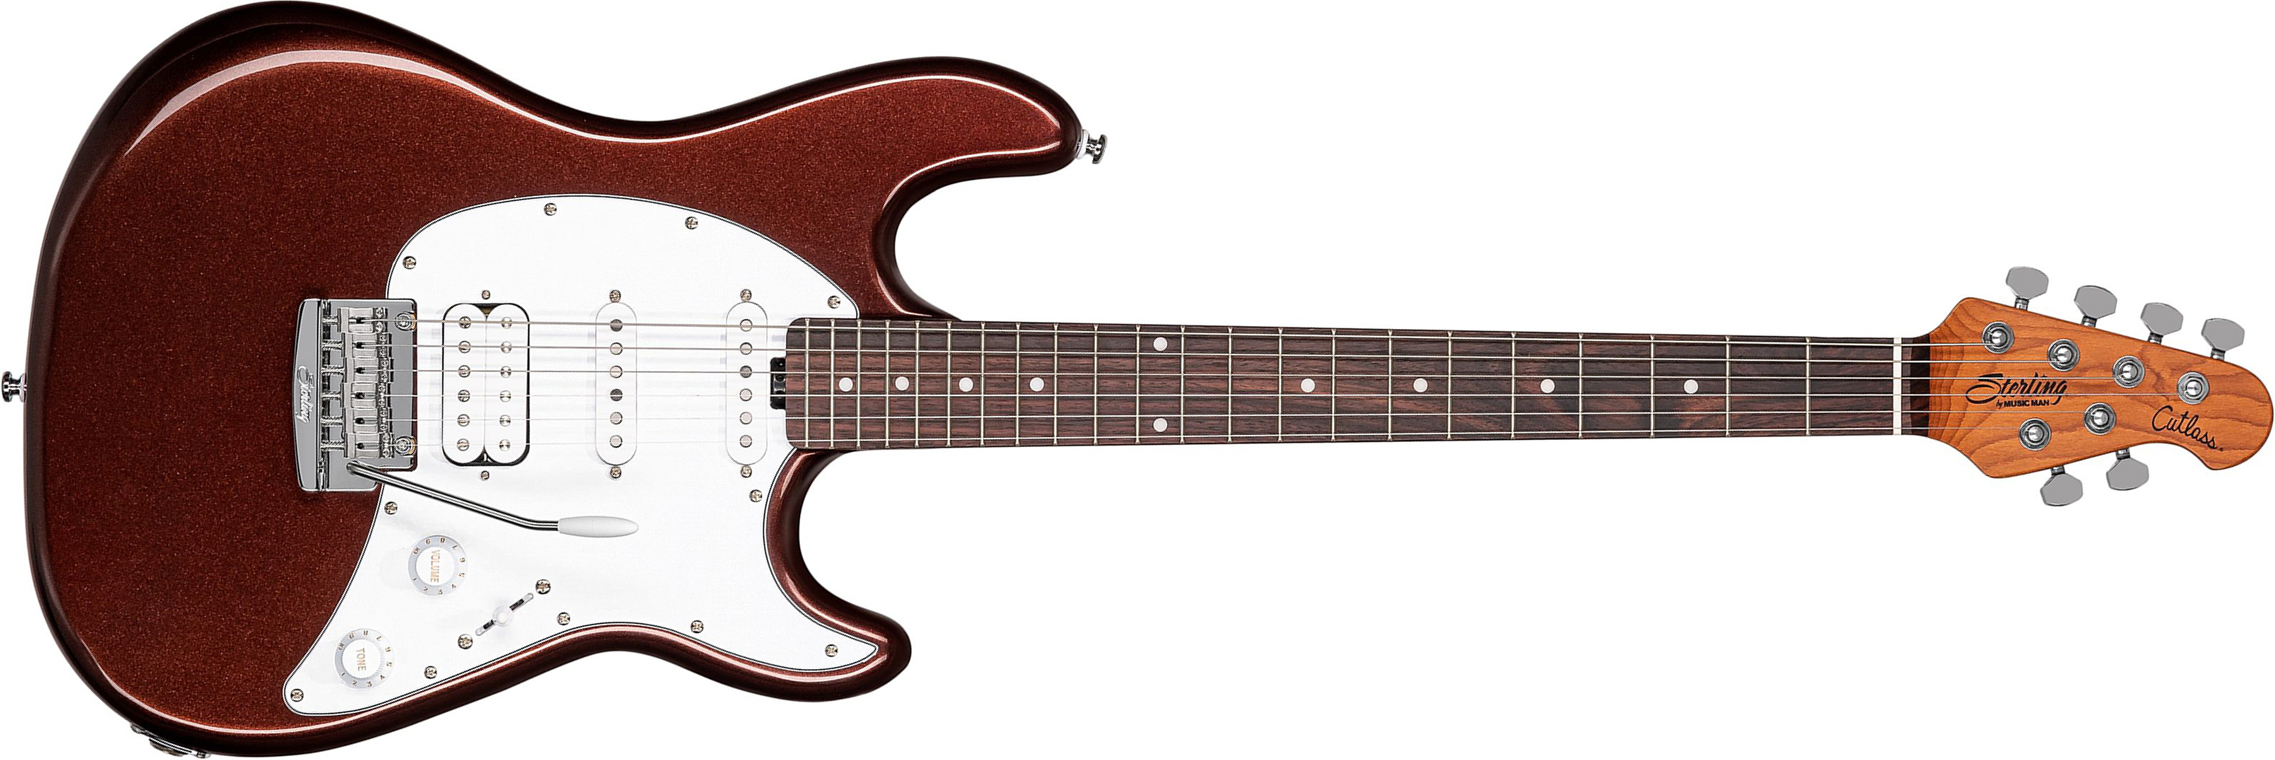 Sterling By Musicman Cutlass Ct50hss Trem Rw - Dropped Copper - Guitarra eléctrica con forma de str. - Main picture